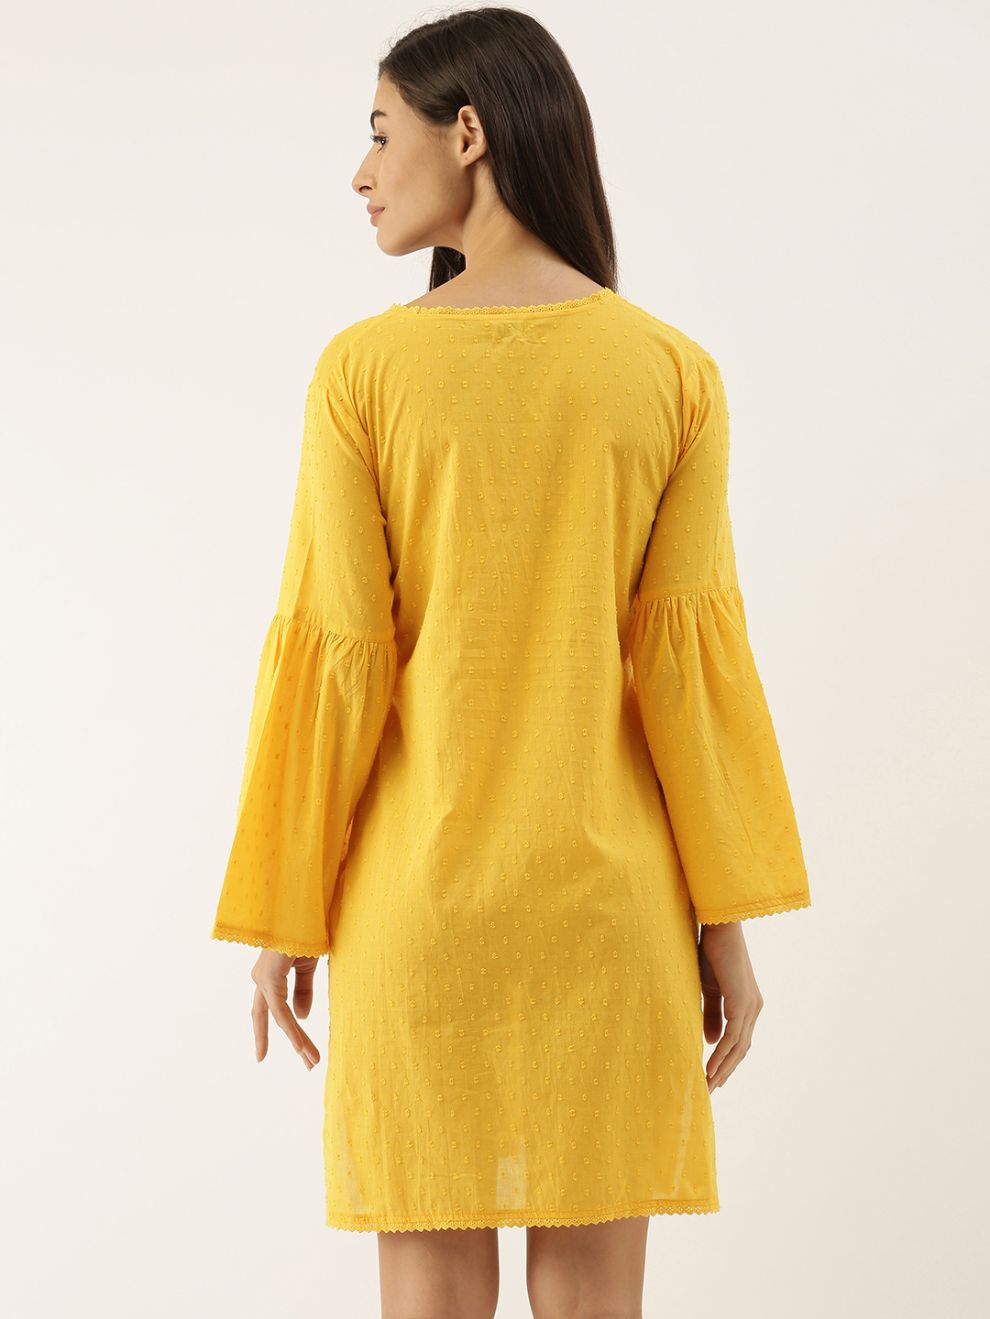 Slumber Jill Cyril Mustard Yellow Bell Sleeves Night Dress